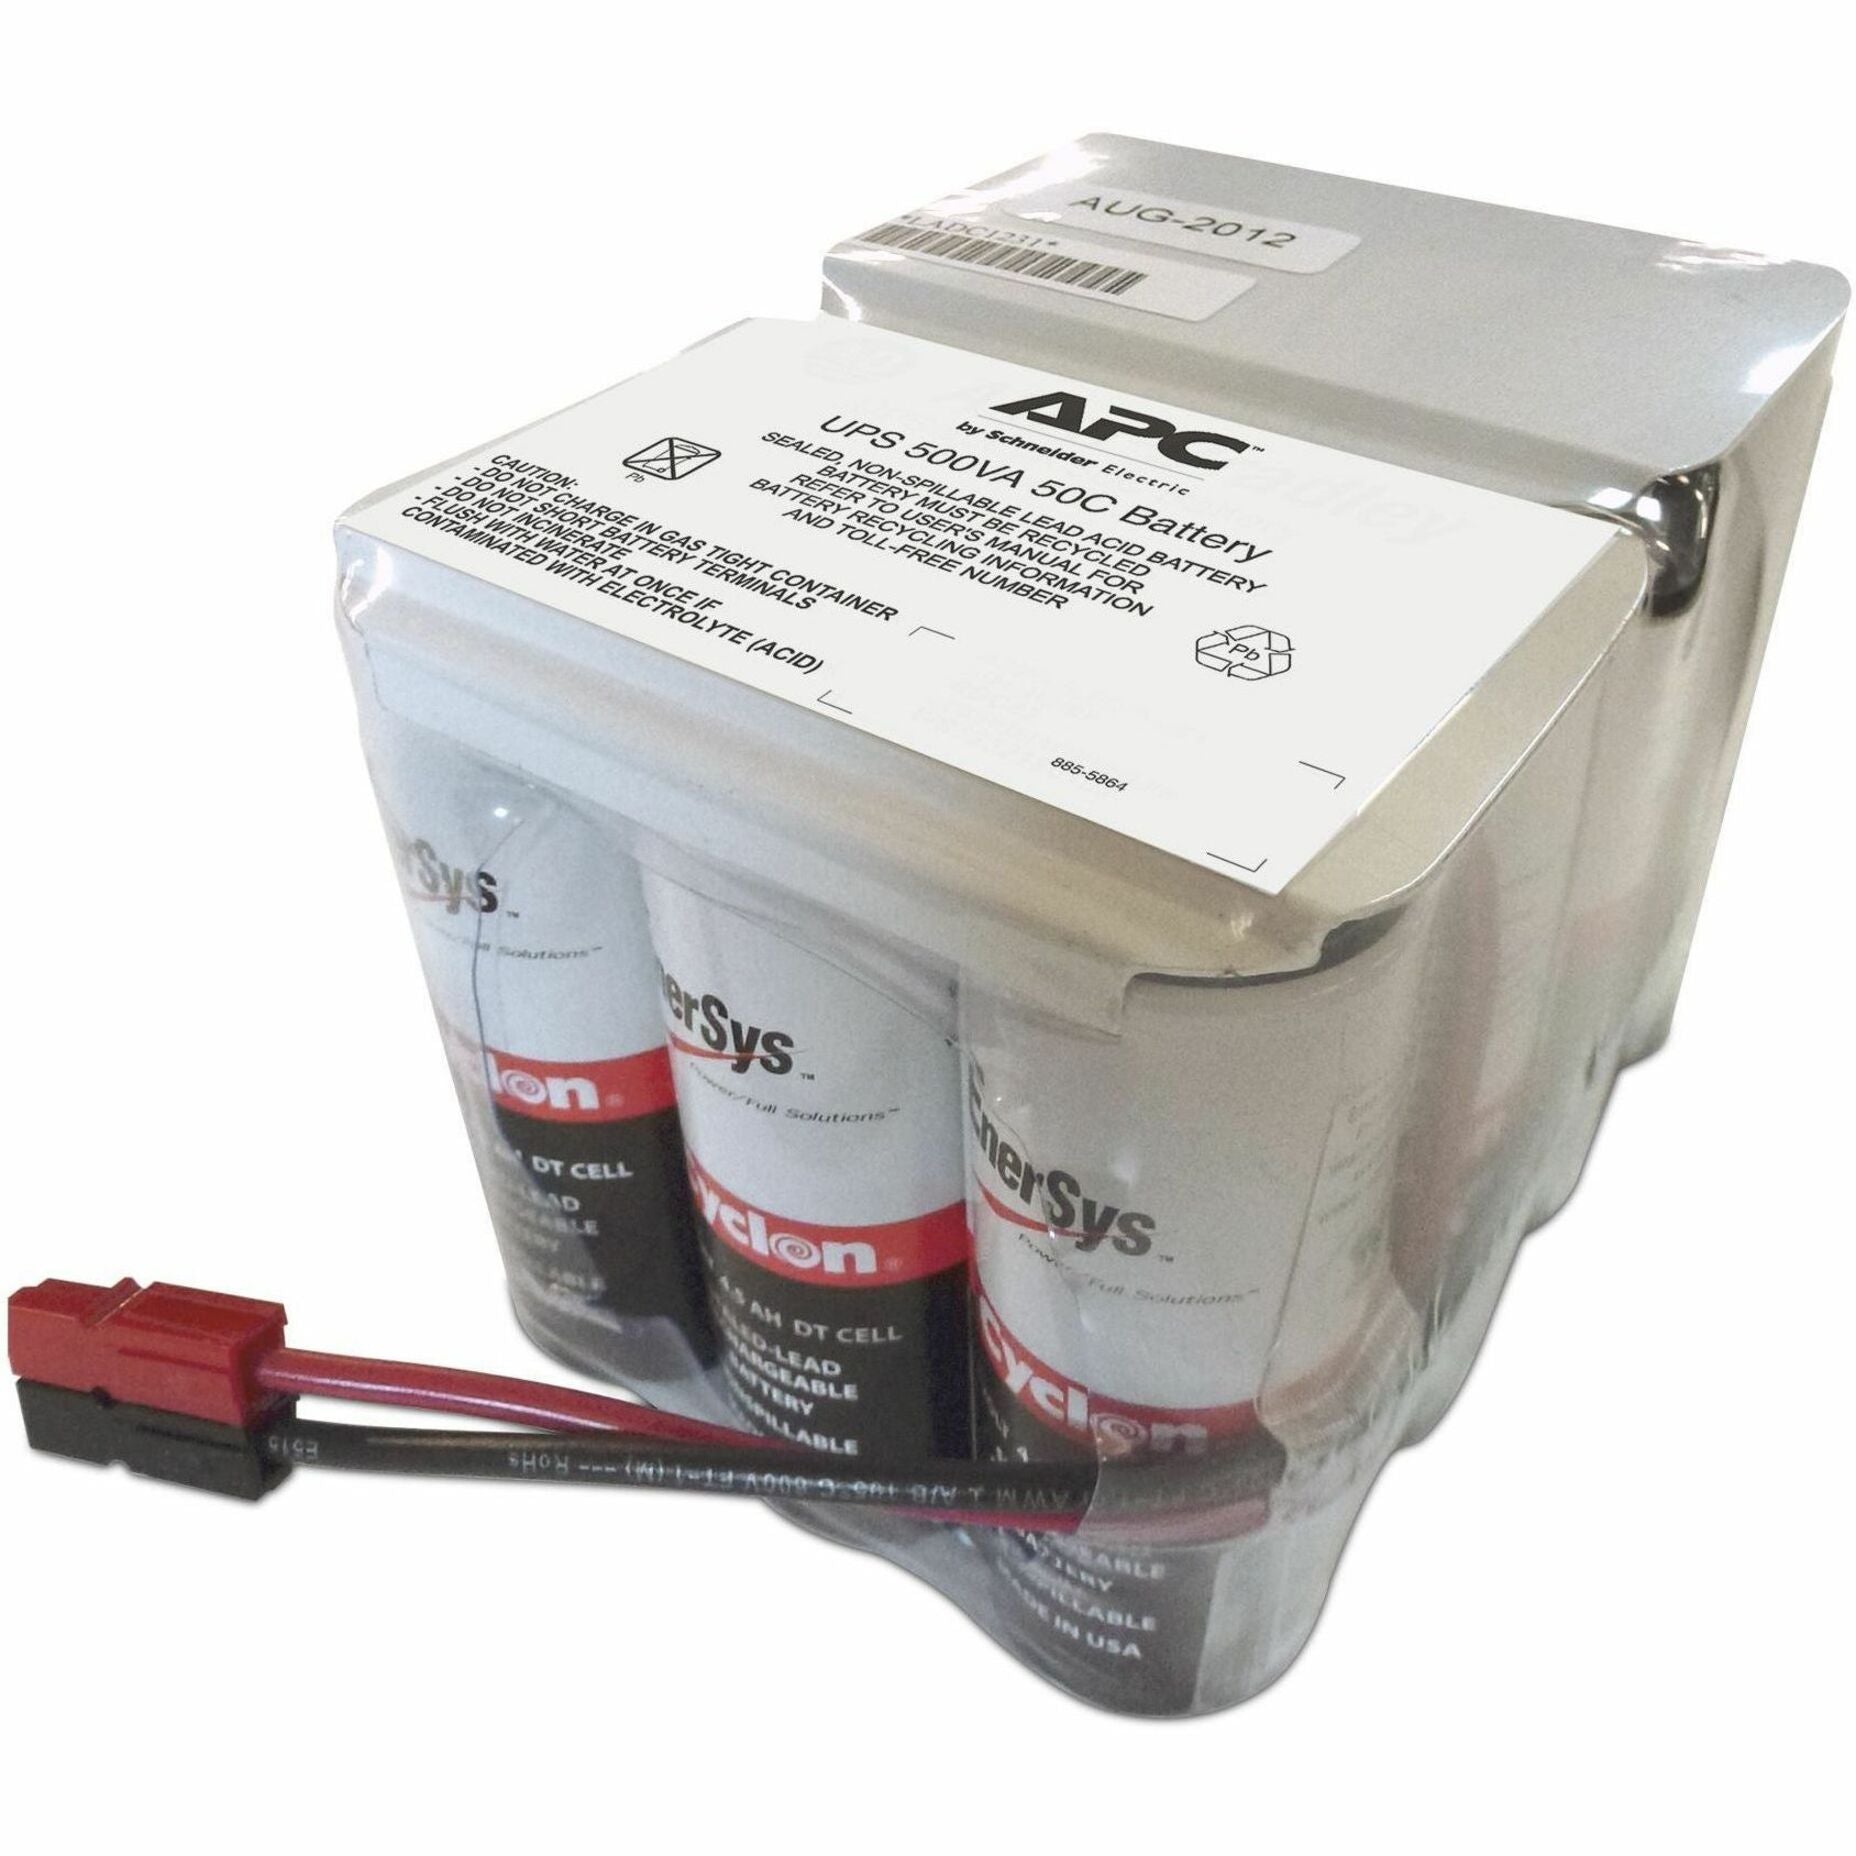 APC APCRBC136 Replacement Battery Cartridge # 136, 108 VAh, 24 V DC, Lead Acid, 5 Year Battery Life